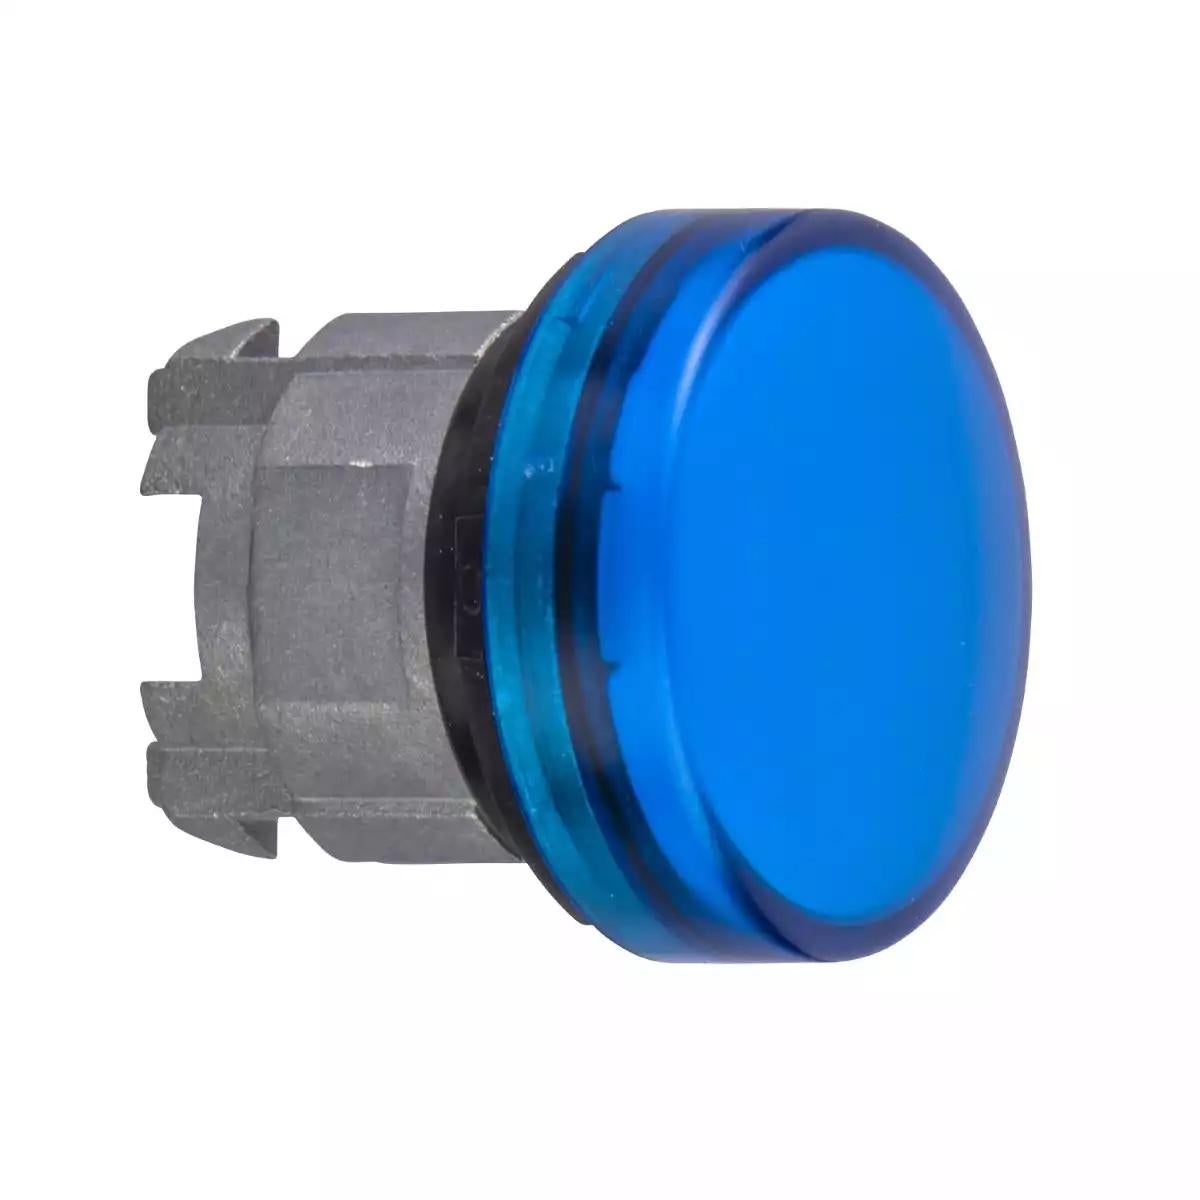 Pilot light head, Harmony XB4, metal, blue, 22mm, plain lens for BA9s bulb